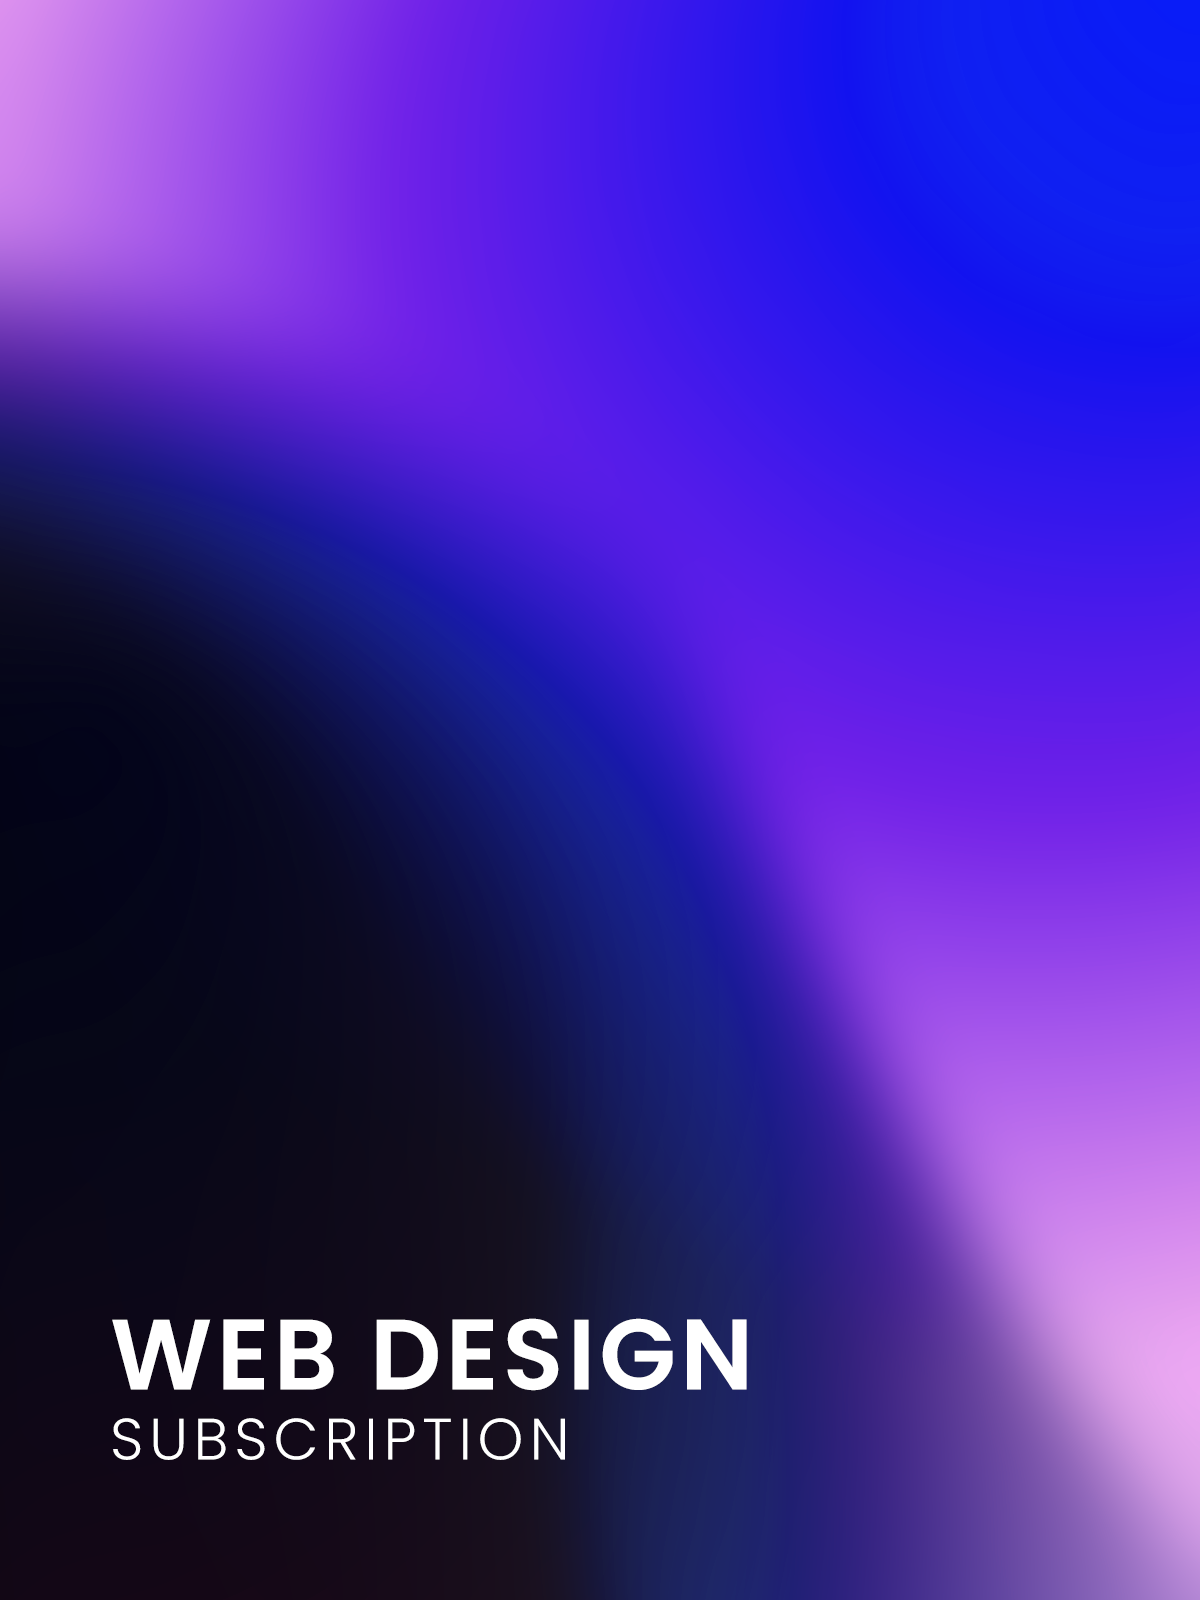 Web Design Subscription Service